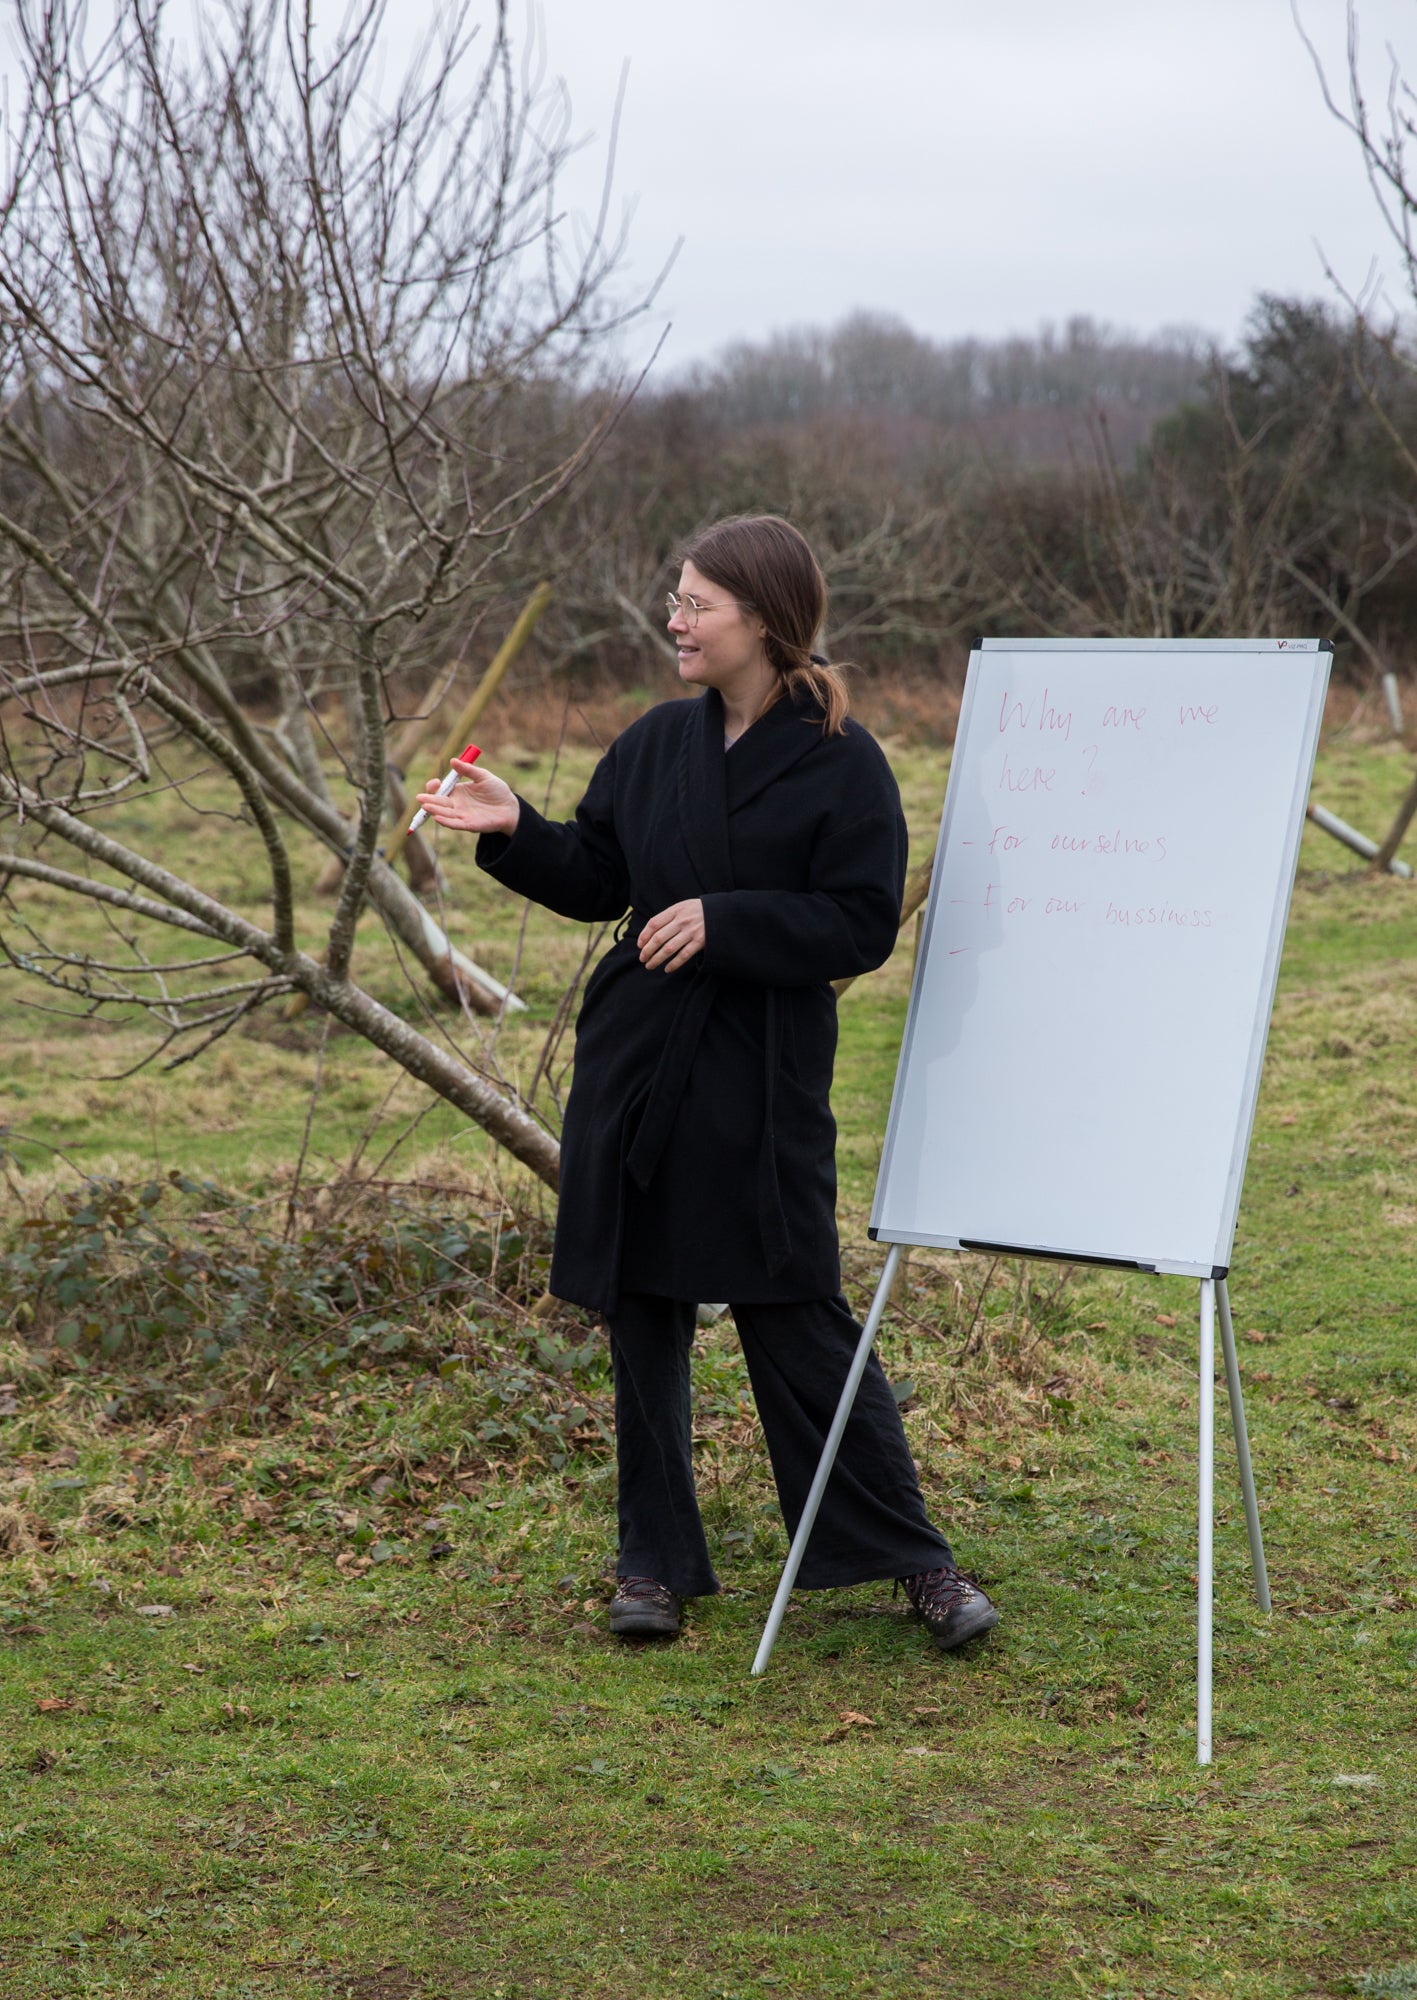 Wine Educator, Debbie Warner teaching in an Orchard